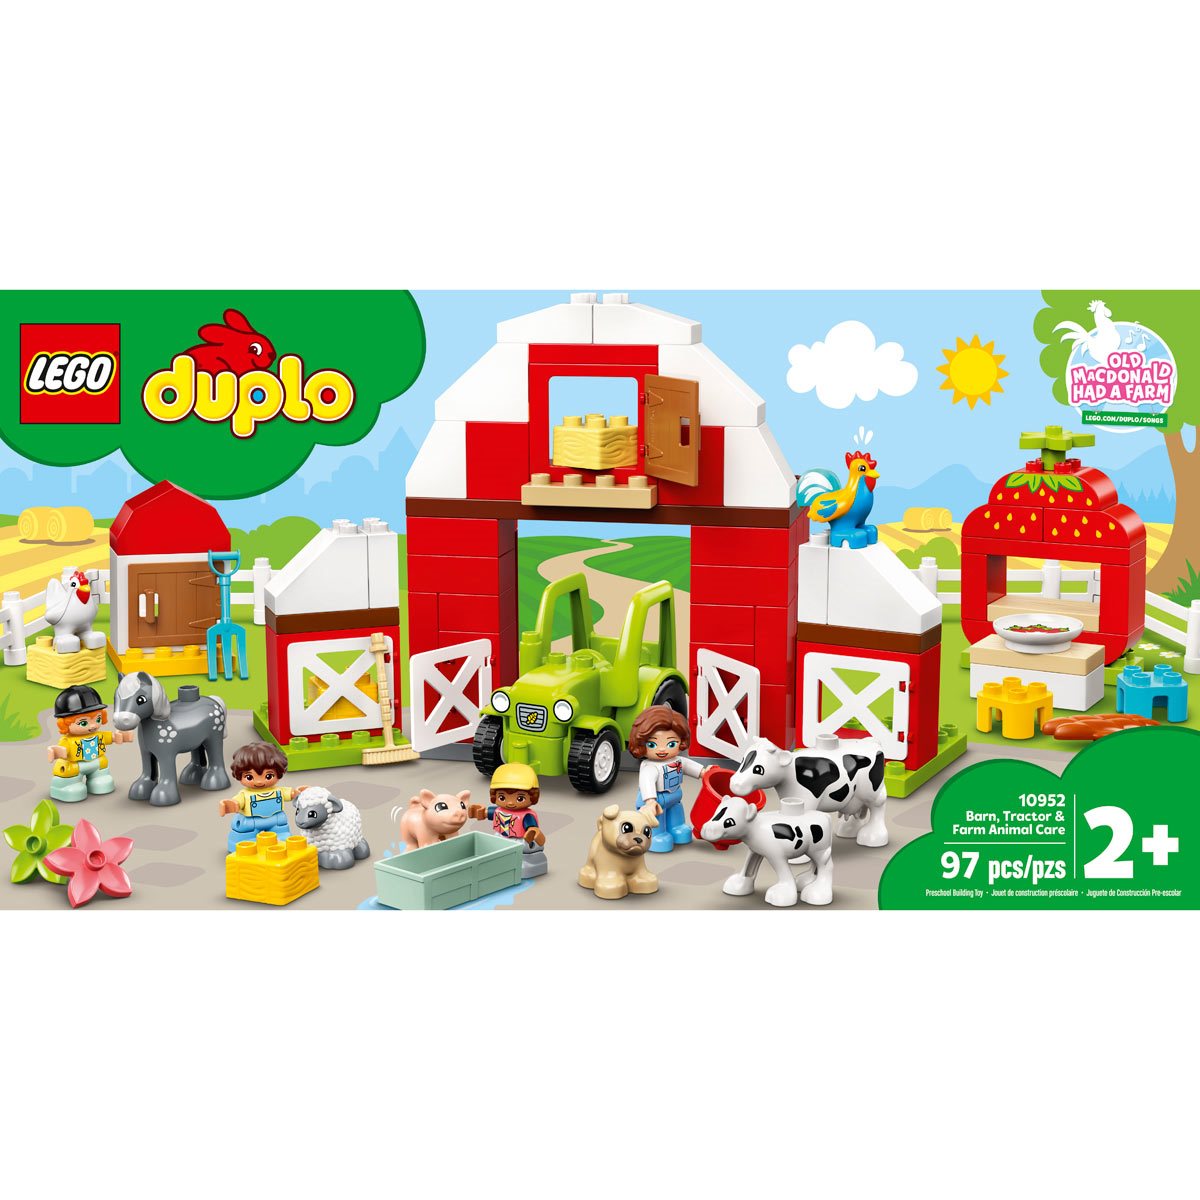 hav det sjovt fangst rense LEGO 10952 DUPLO Barn, Tractor & Farm Animal Care